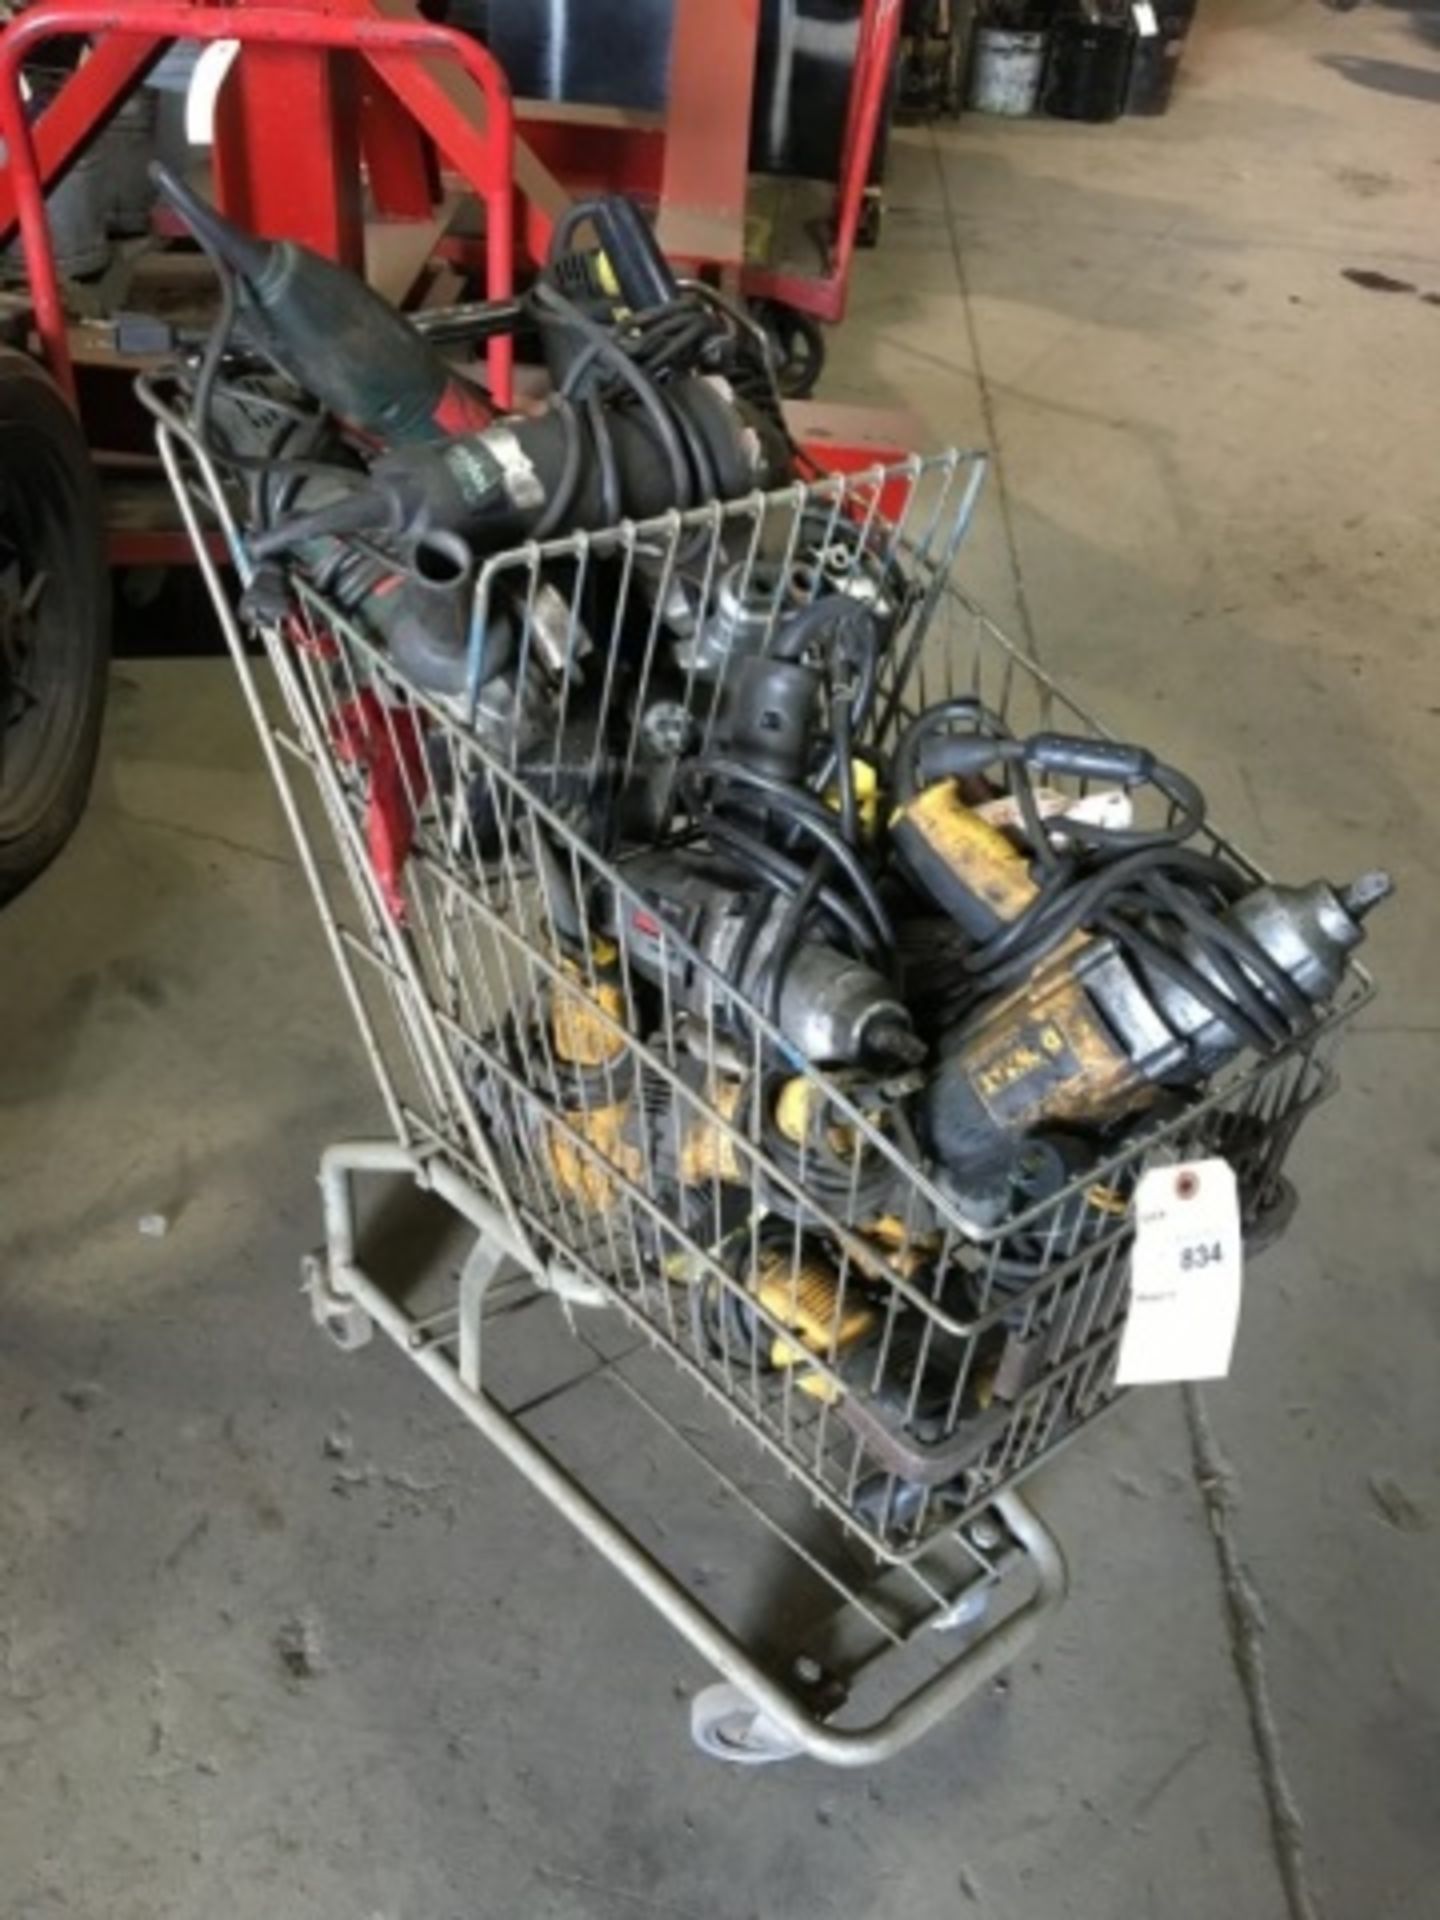 Cart full of power tools - repair needed